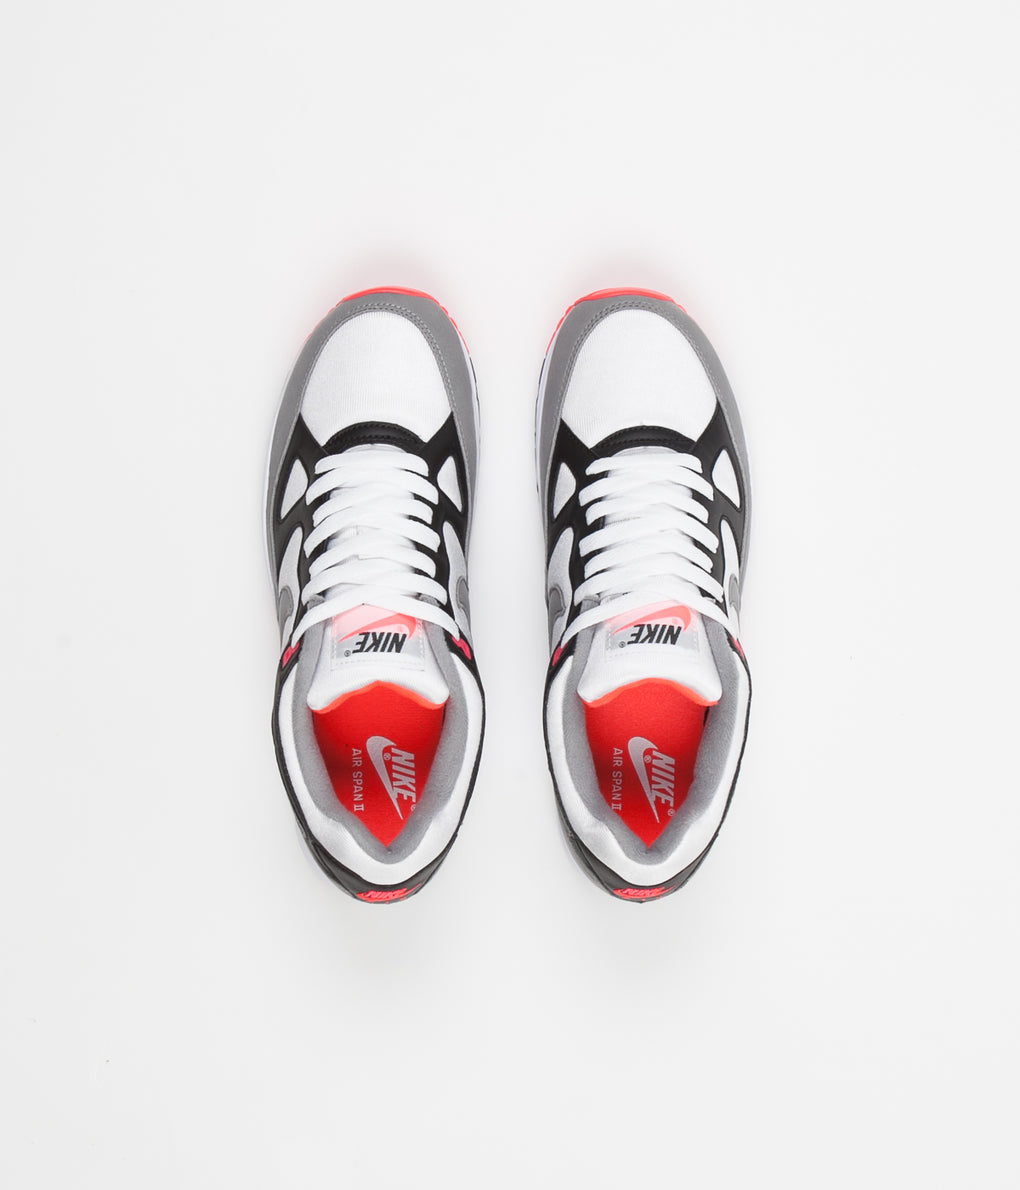 Nike Air Span II Shoes - Black / Dust - Solar Red - White | Always in ...